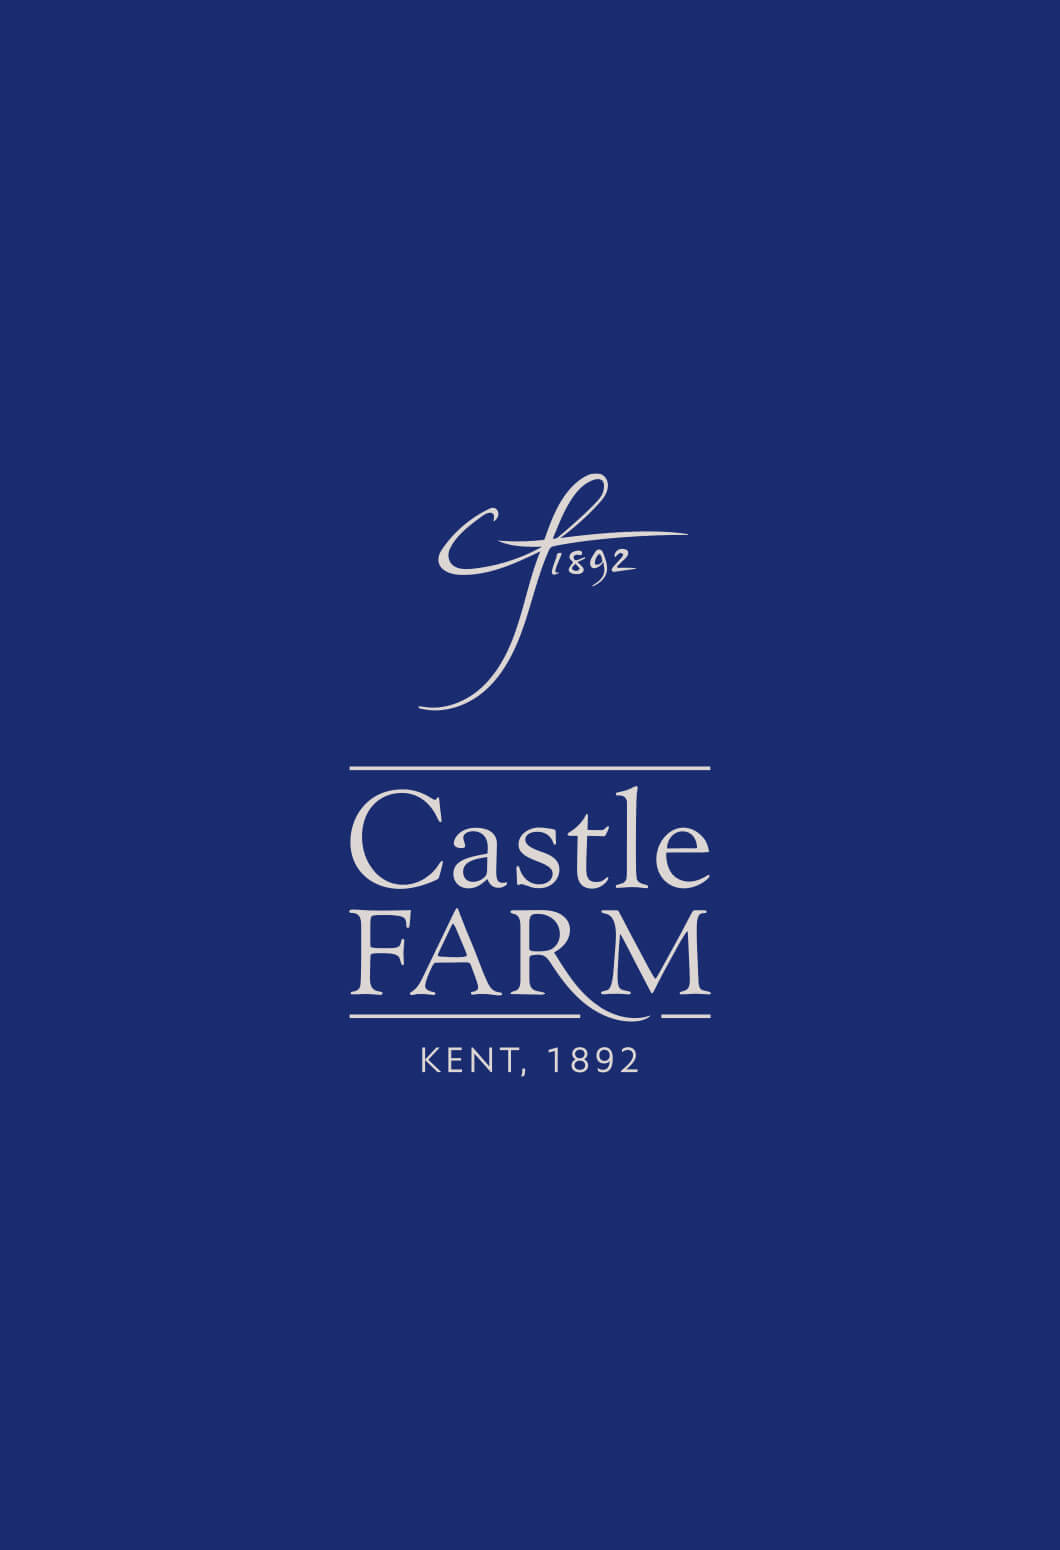 Primary heritage brand logo for Castle Farm